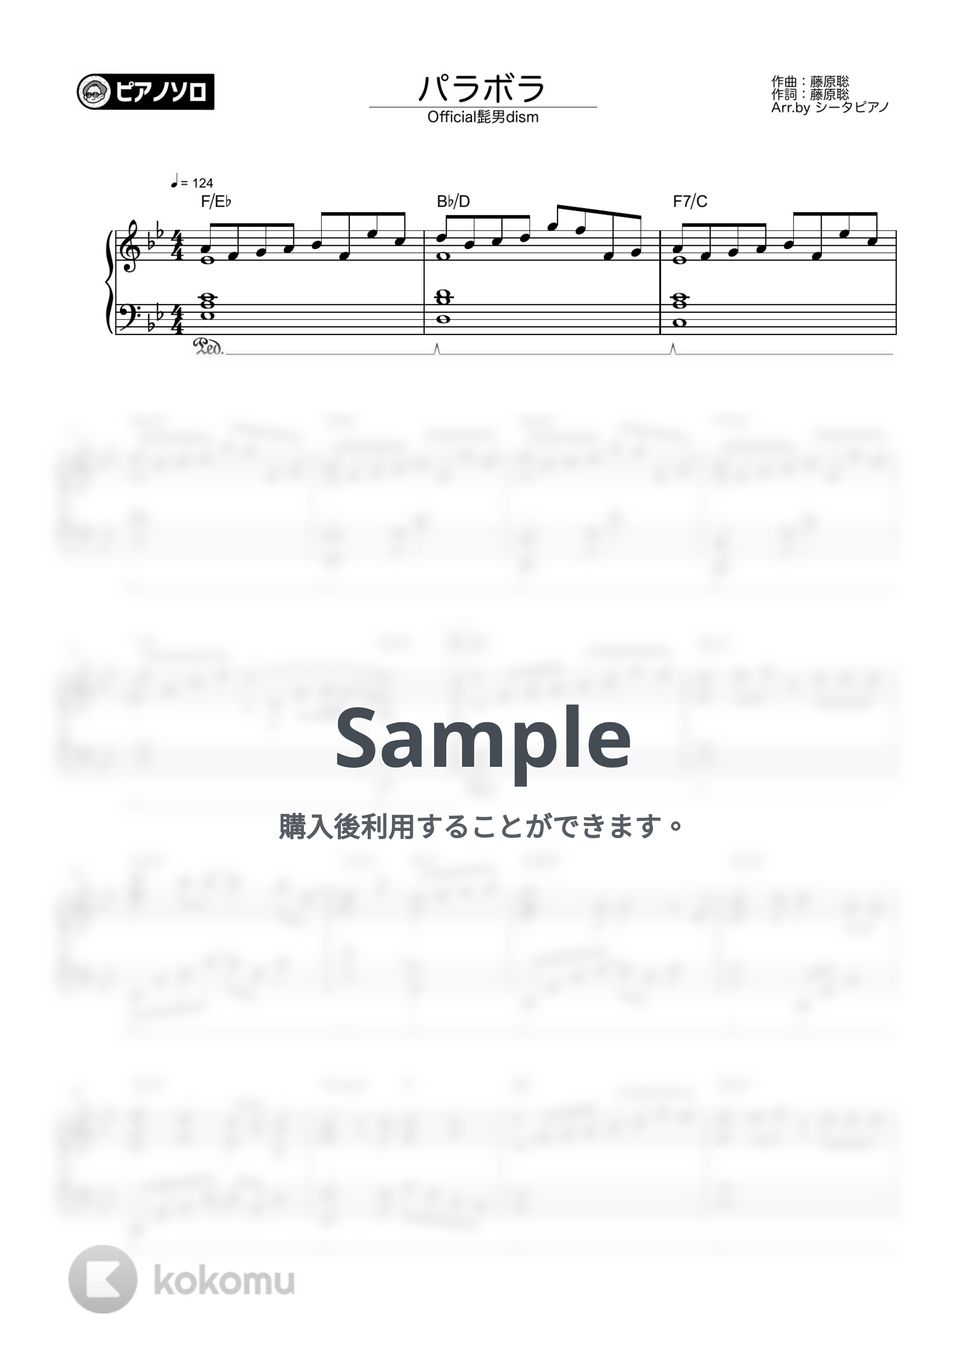 Official髭男dism - パラボラ by シータピアノ